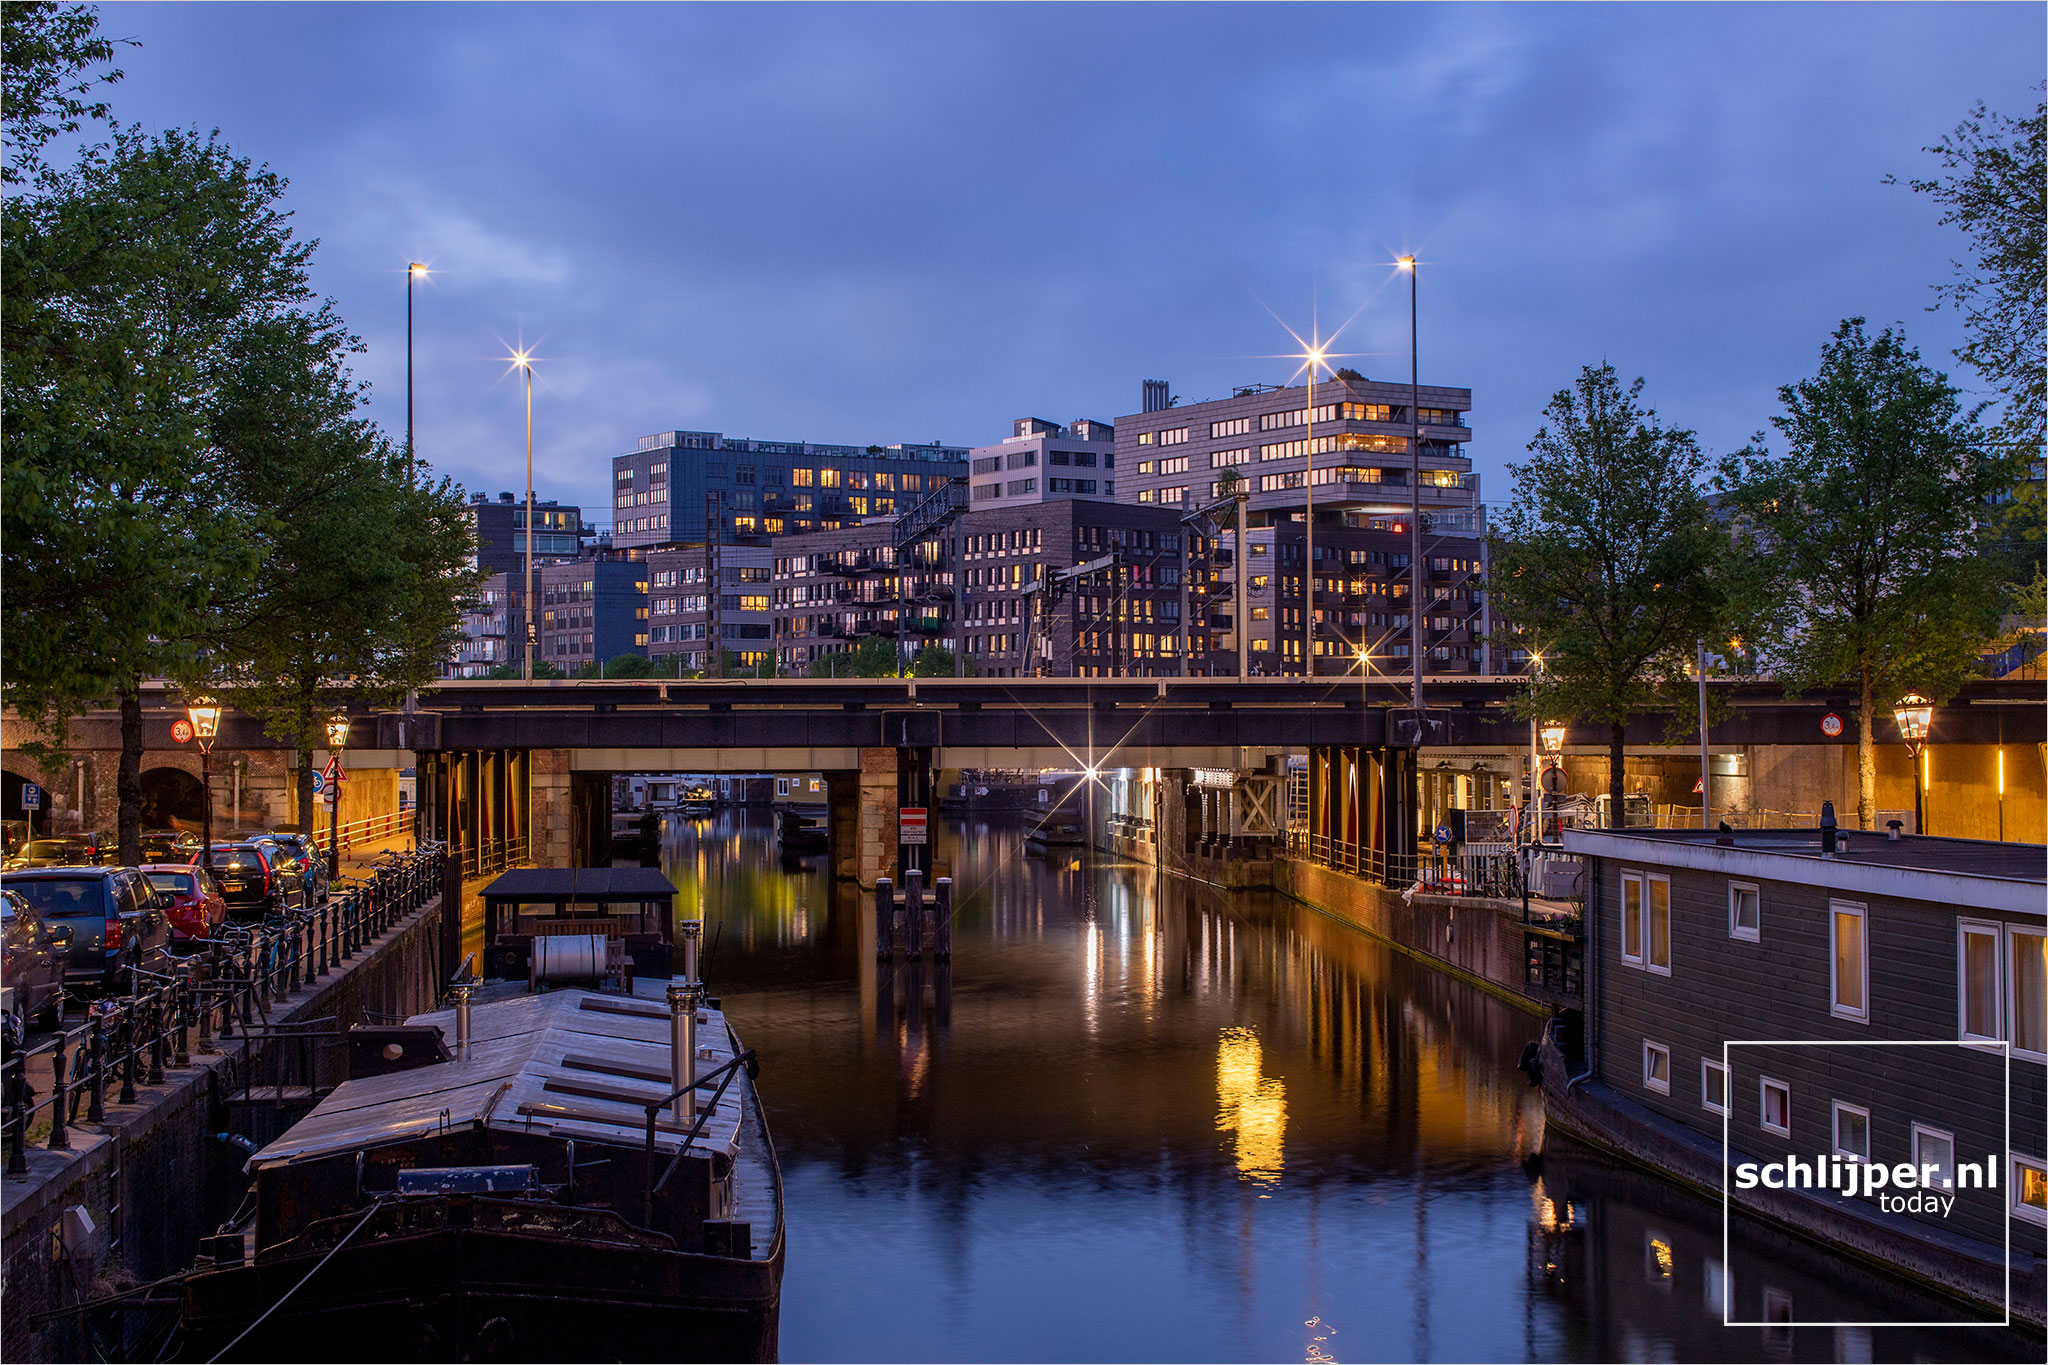 Nederland, Amsterdam, 2 mei 2020